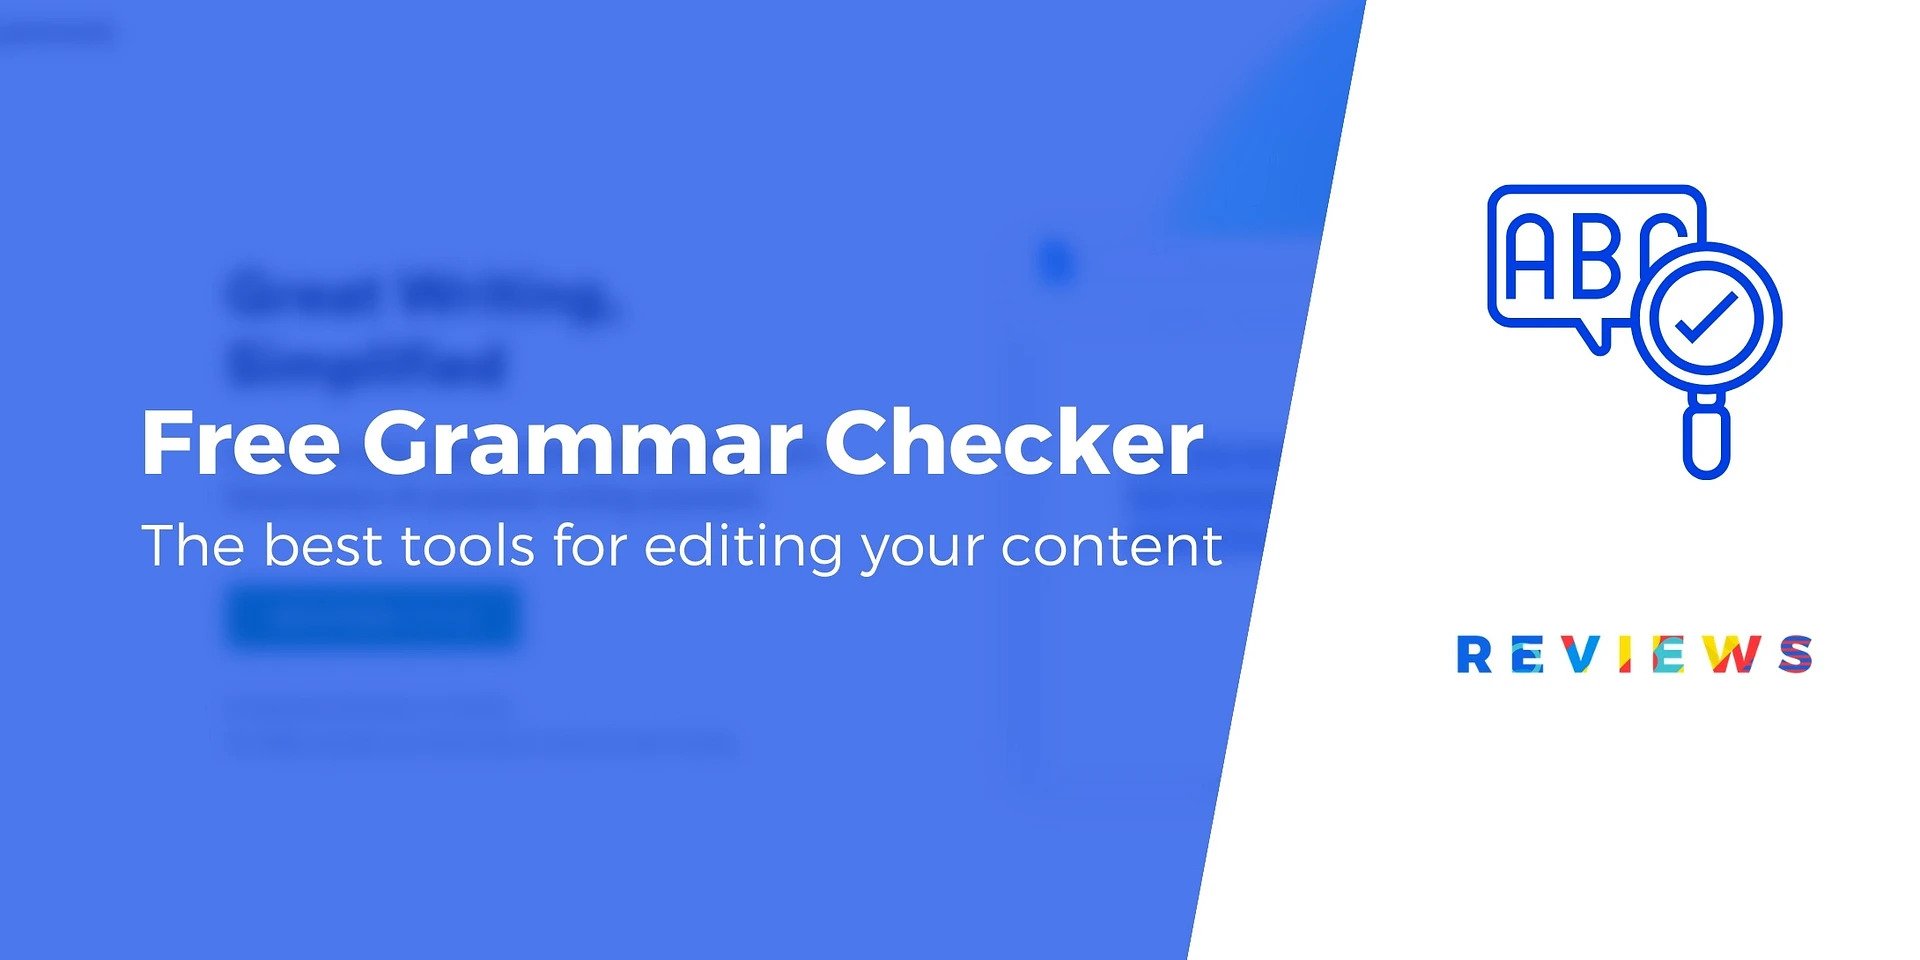 Free Grammar Checker tools